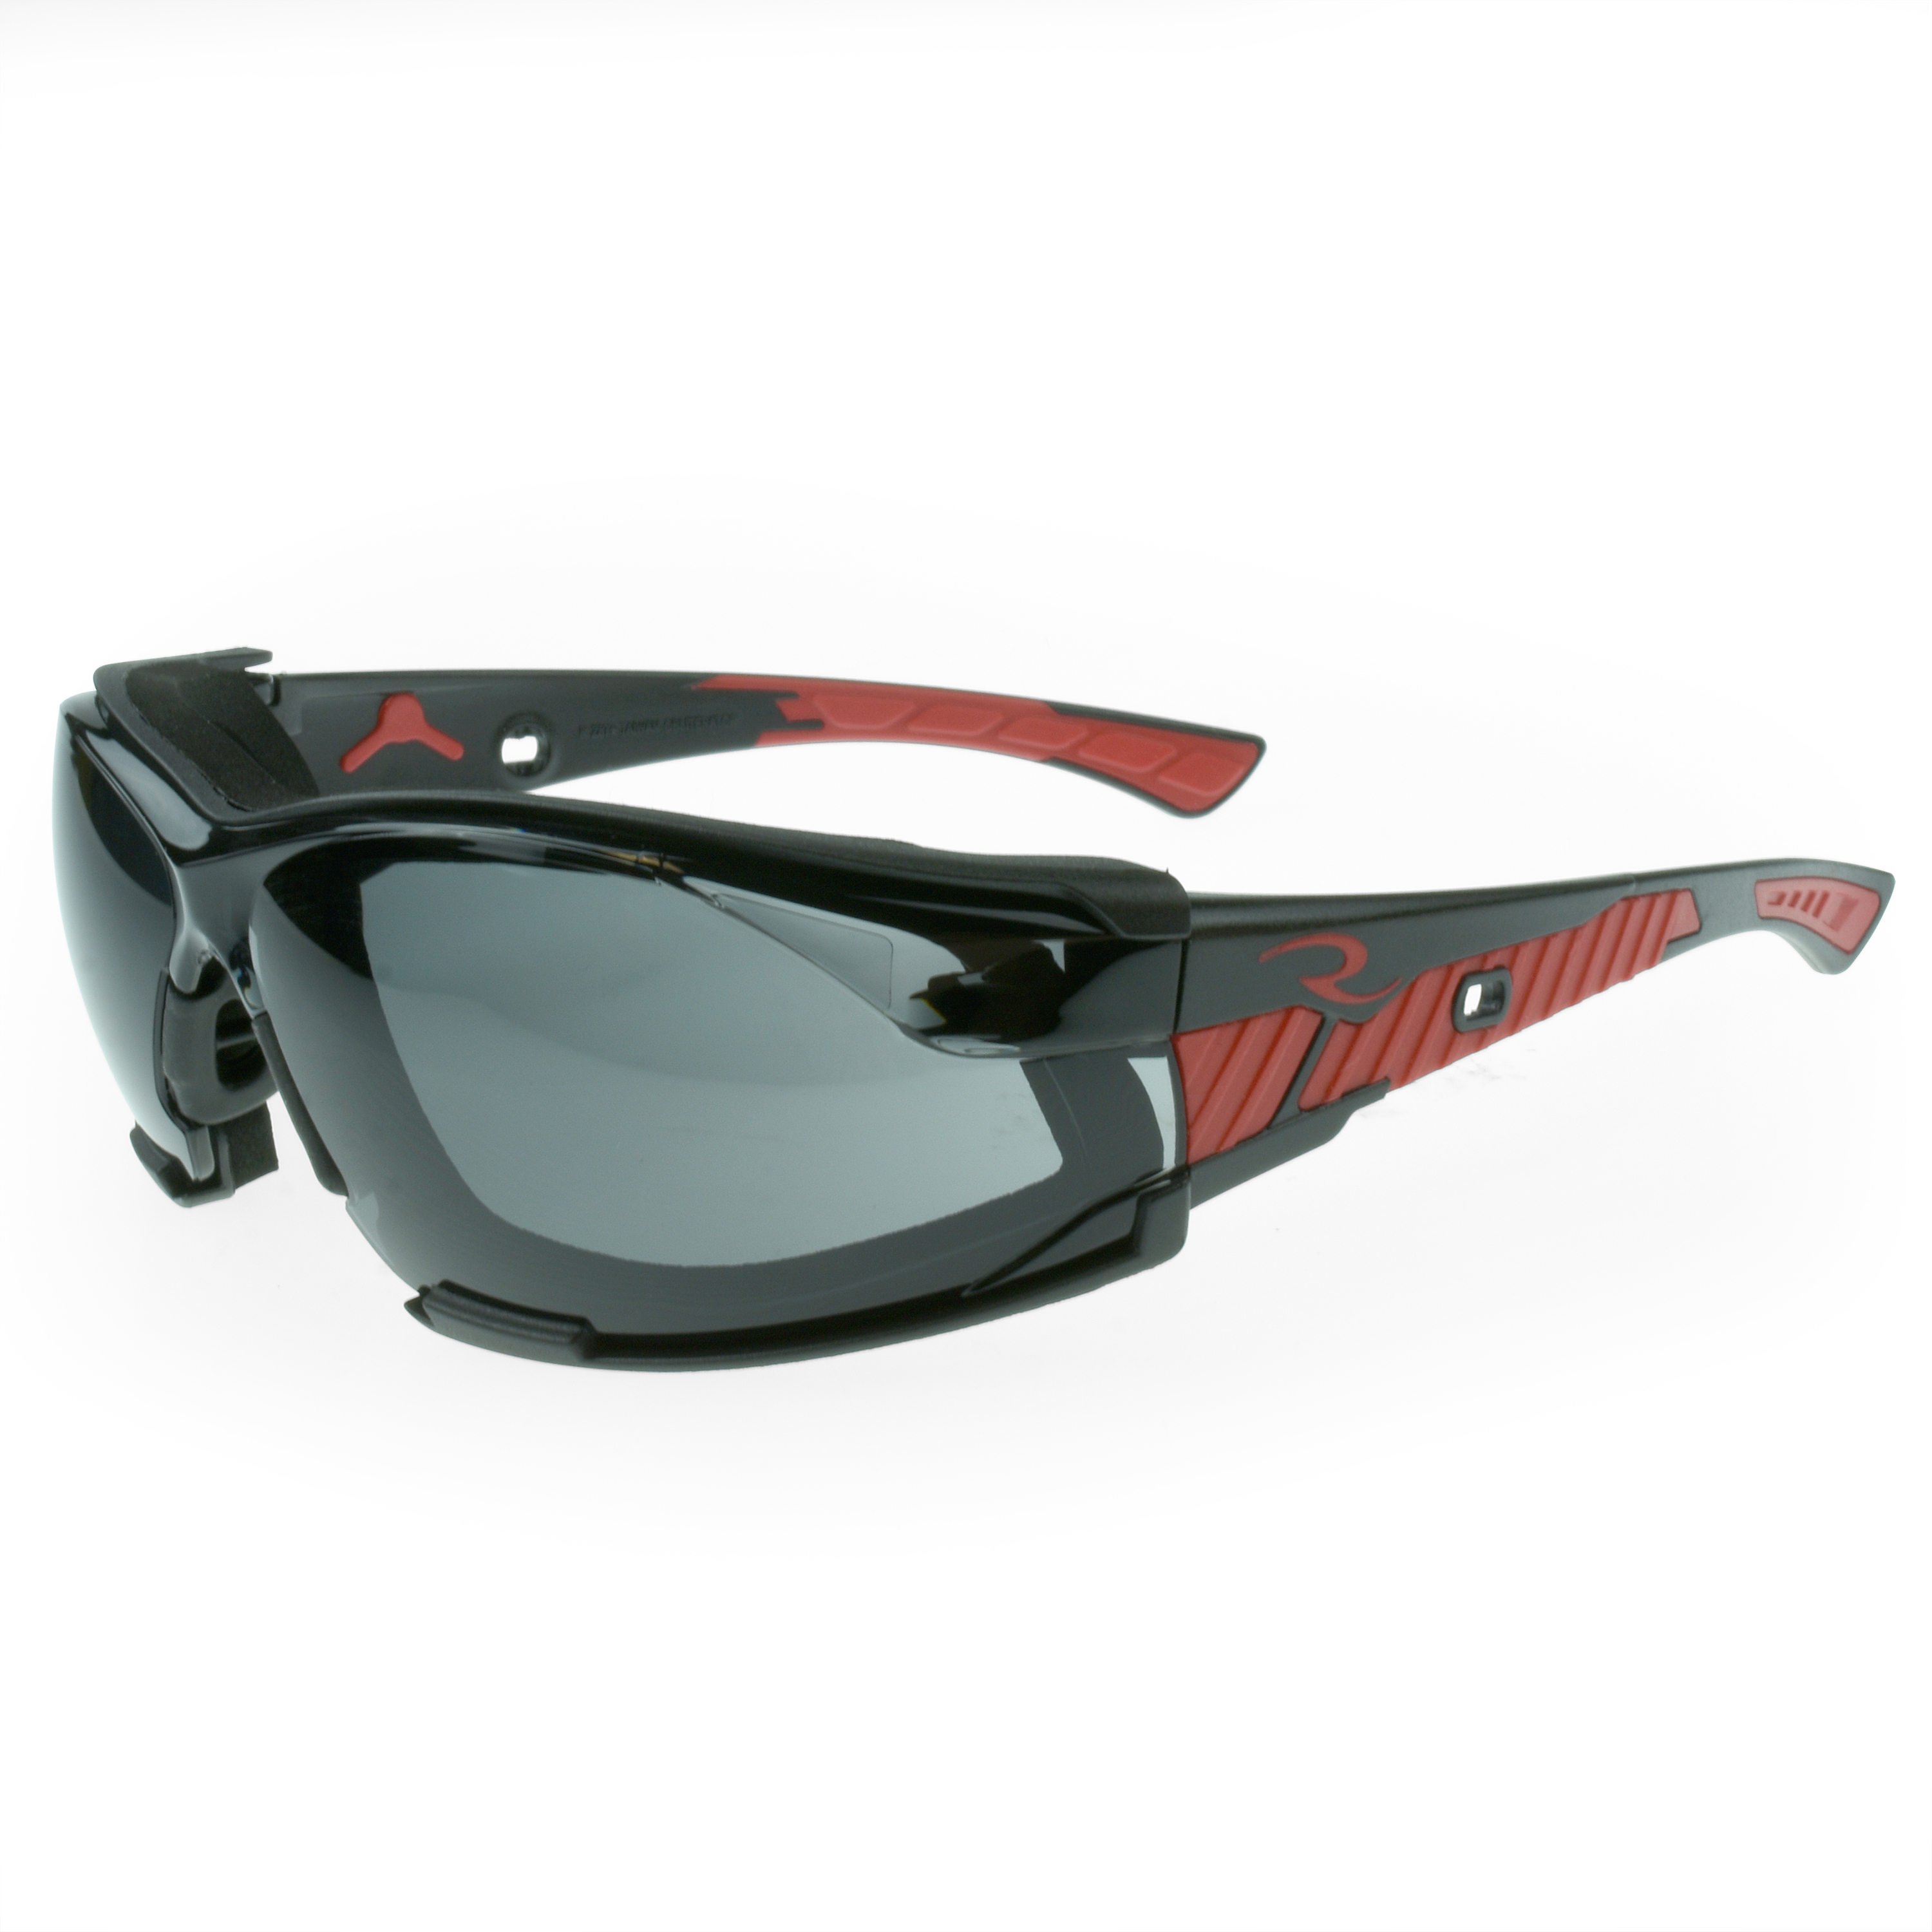 Obliterator™ IQ - IQuity™ Anti-Fog Foam Lined Safety Eyewear - Black / Red Frame - Smoke IQ Anti-Fog Lens